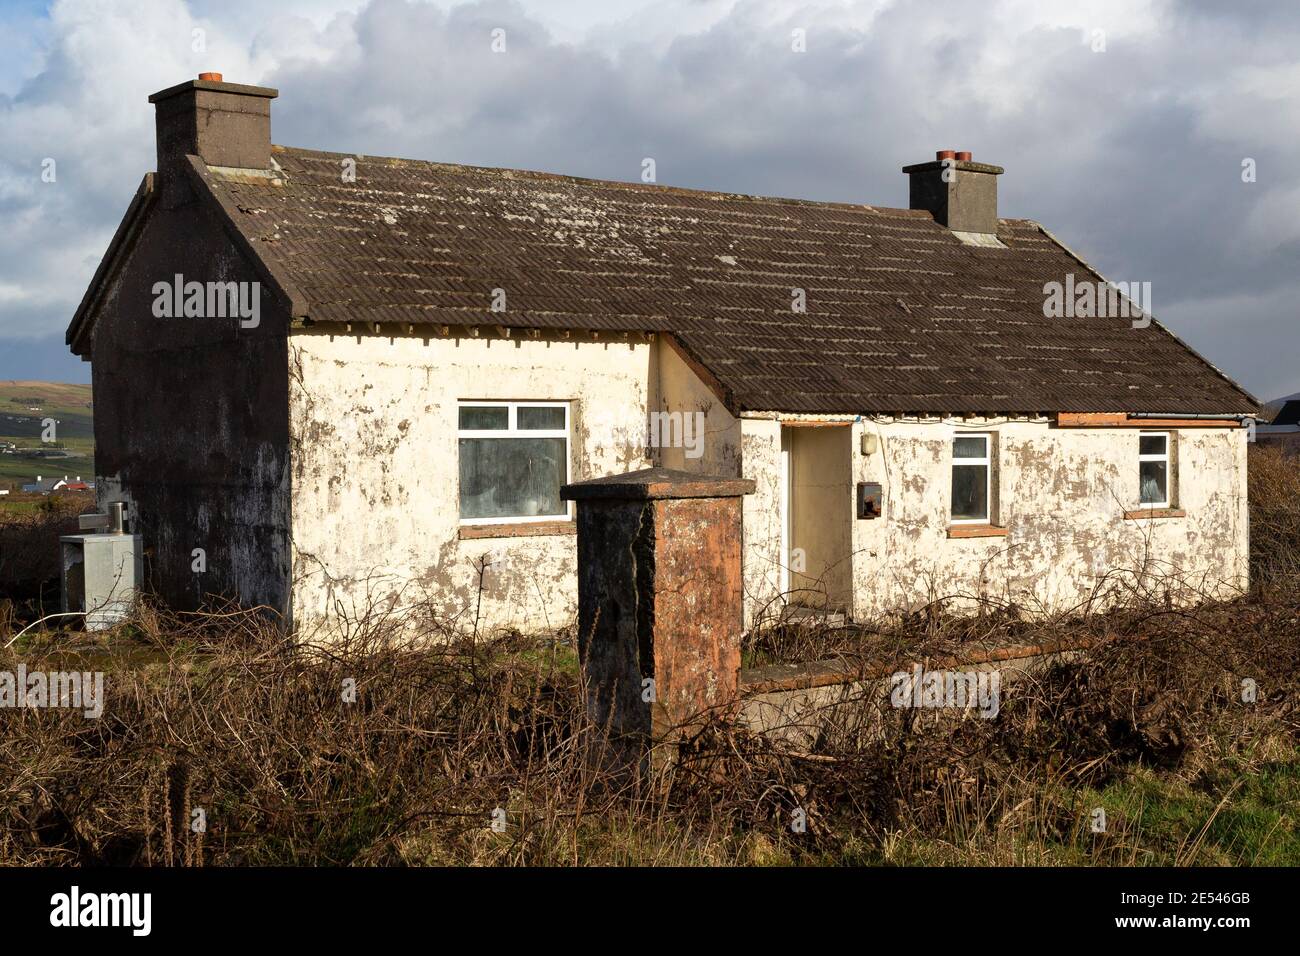 Abandoned Bungalow in need of repair, Ireland Stock Photo